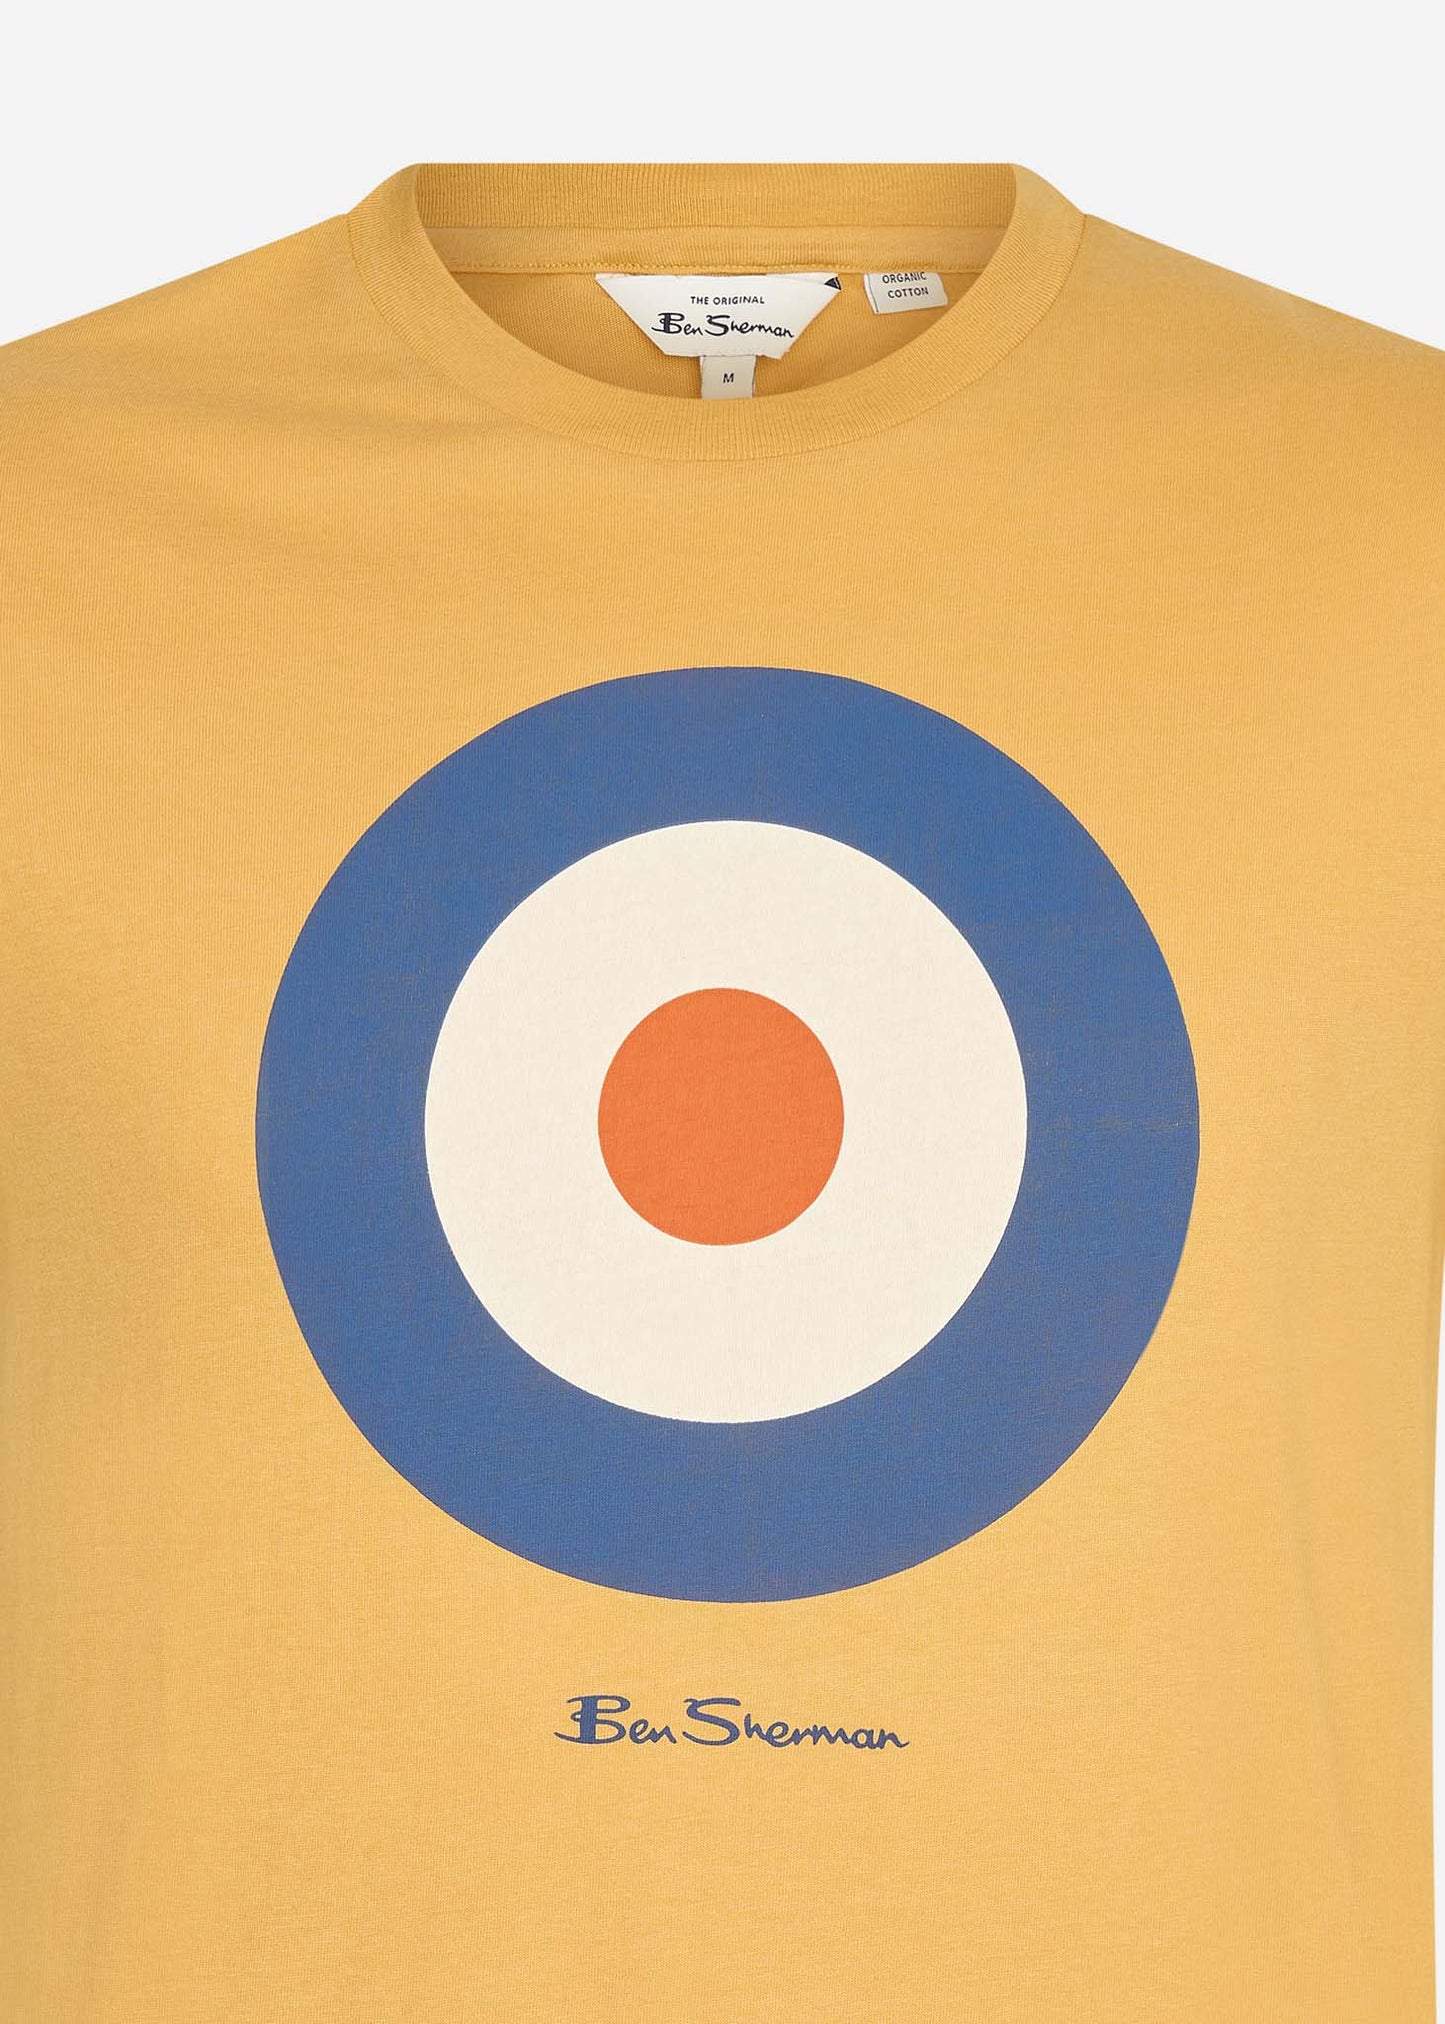 Ben Sherman T-shirts  Signature target tee - butterscotch 